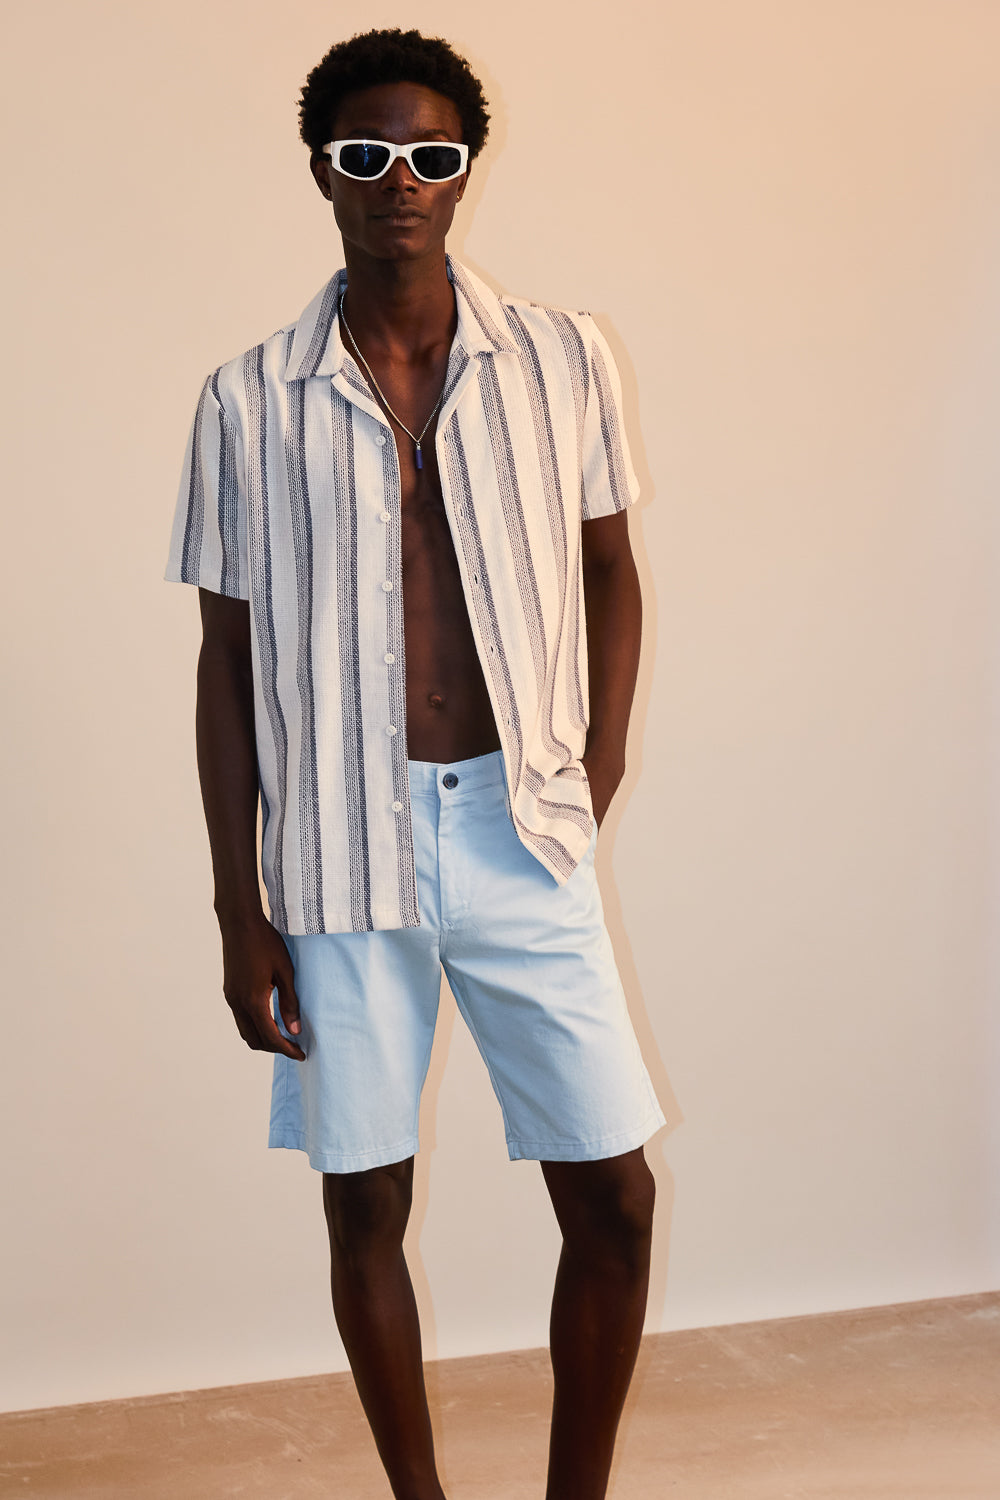 Textured Knit Men's Shirt-White/Navy Stripes